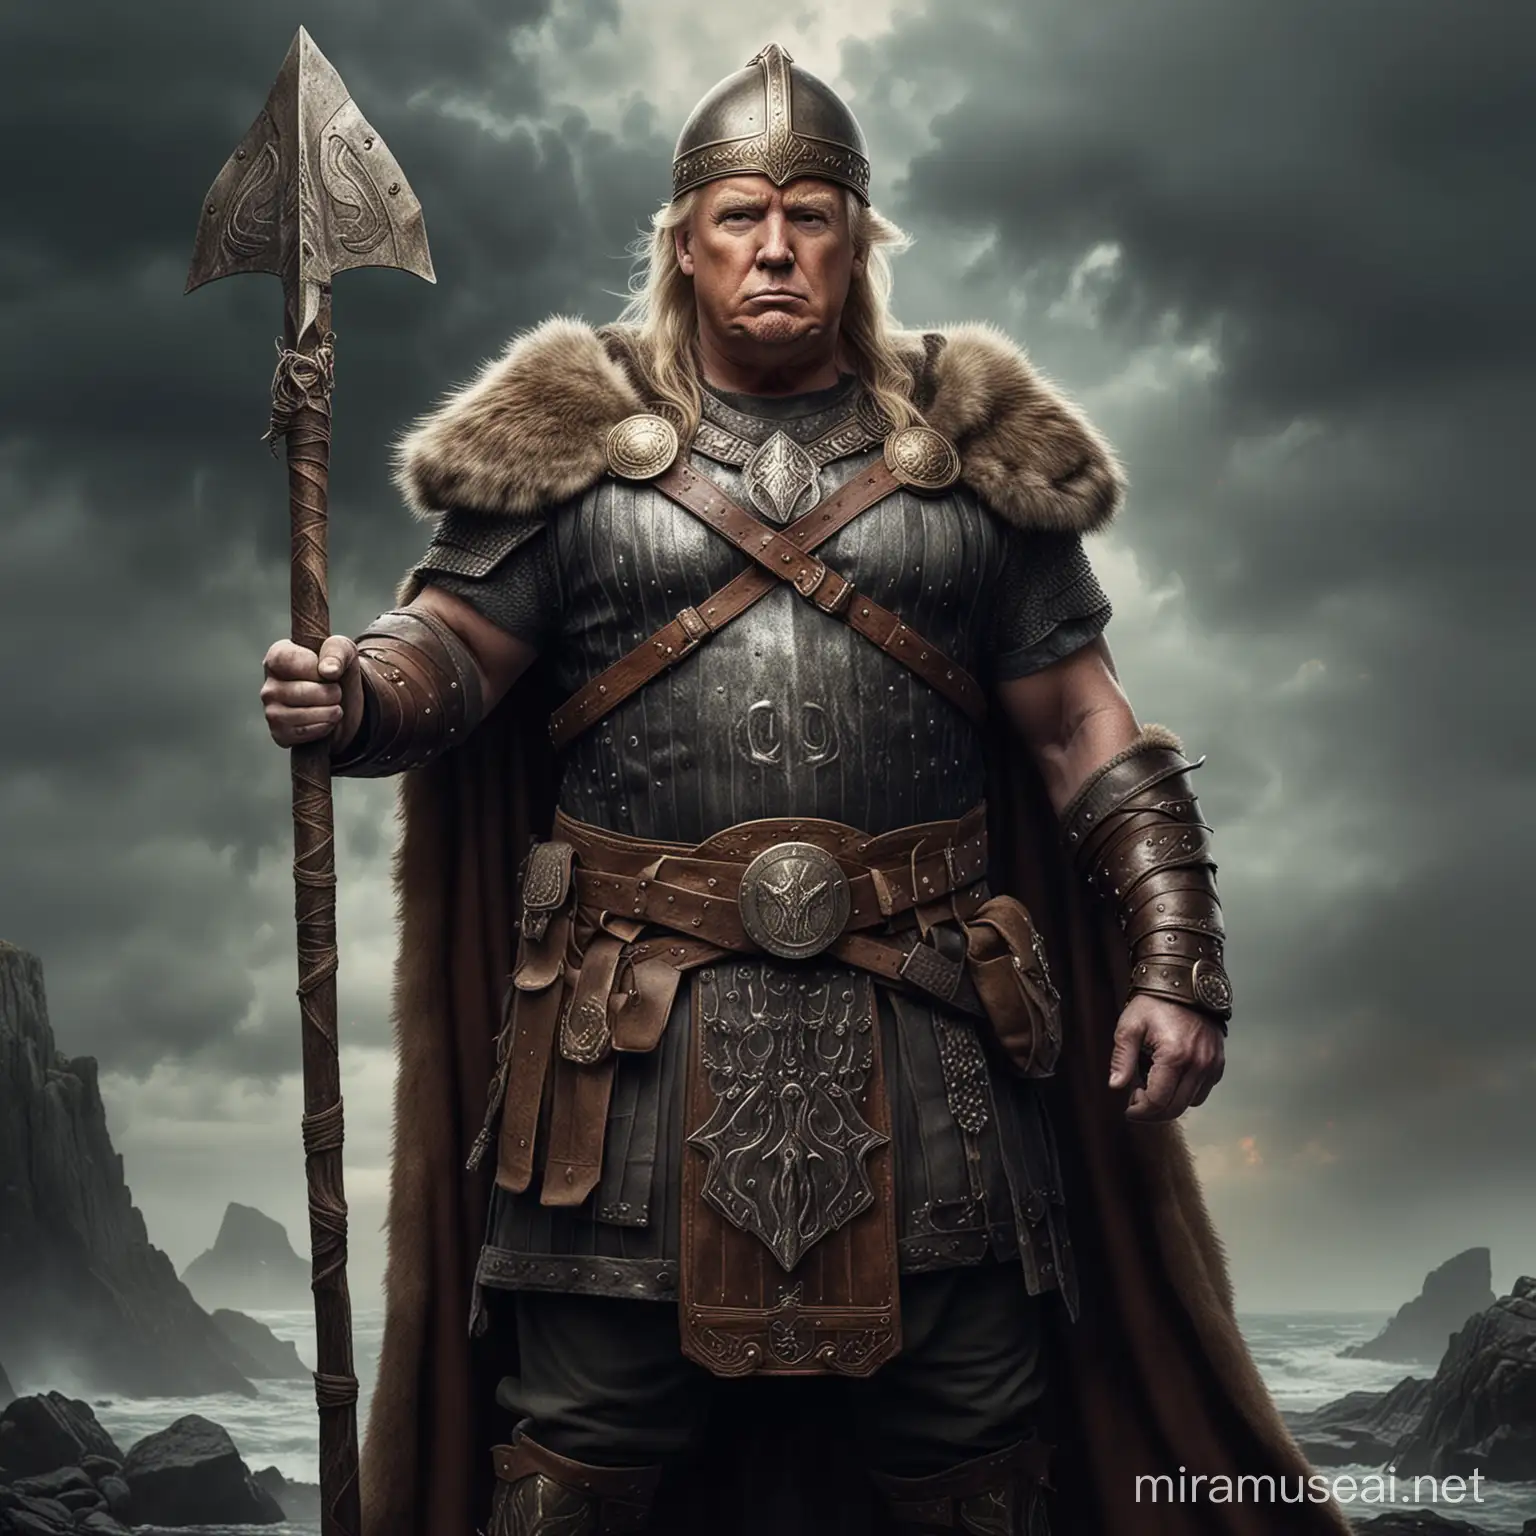 Donald Trump Viking Warrior Political Leader Portrayed in Norse Attire